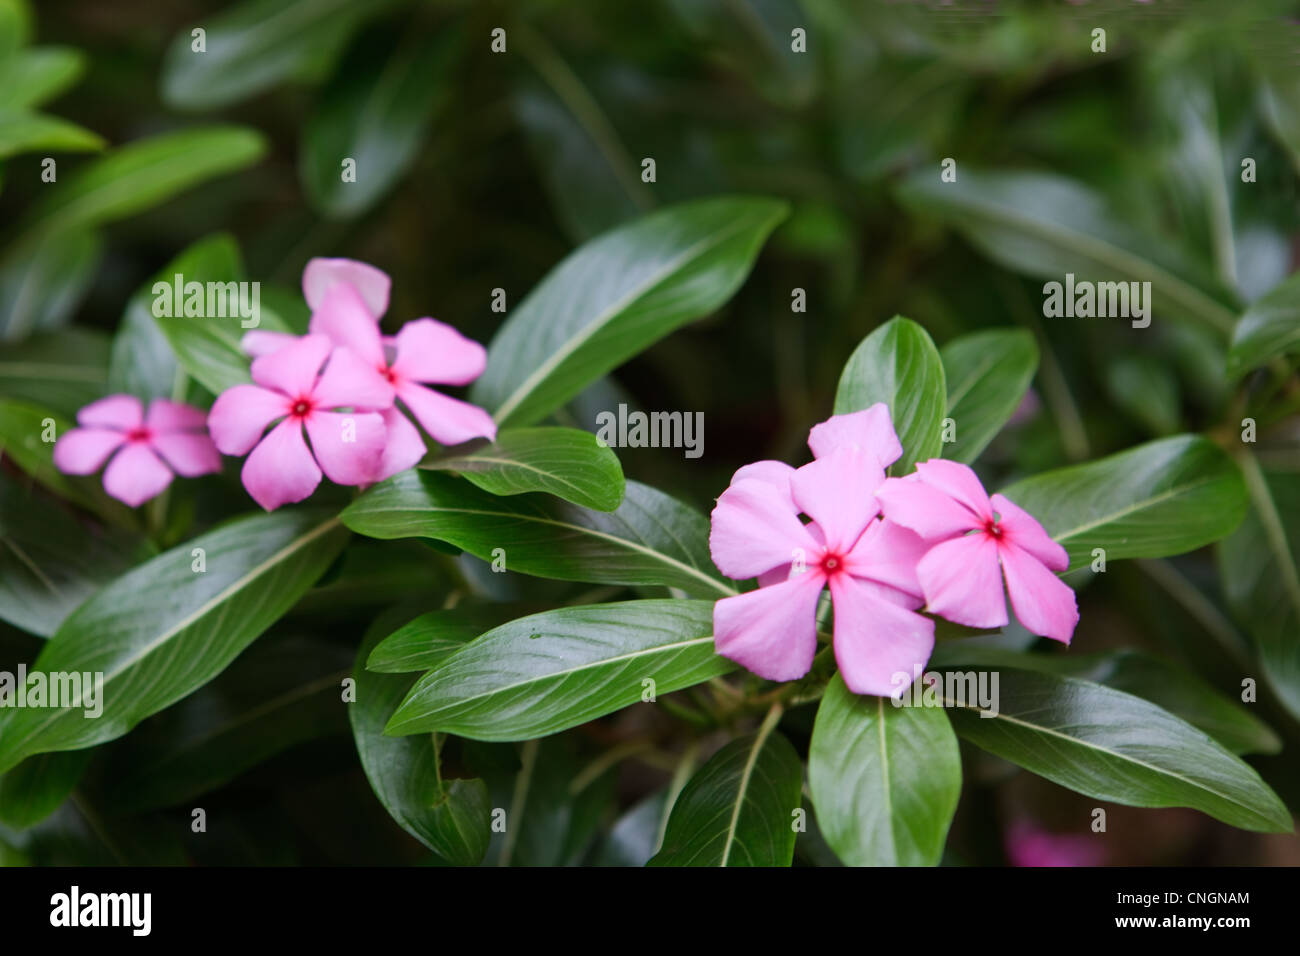 Phlox plants with mauve flowers Stock Photo